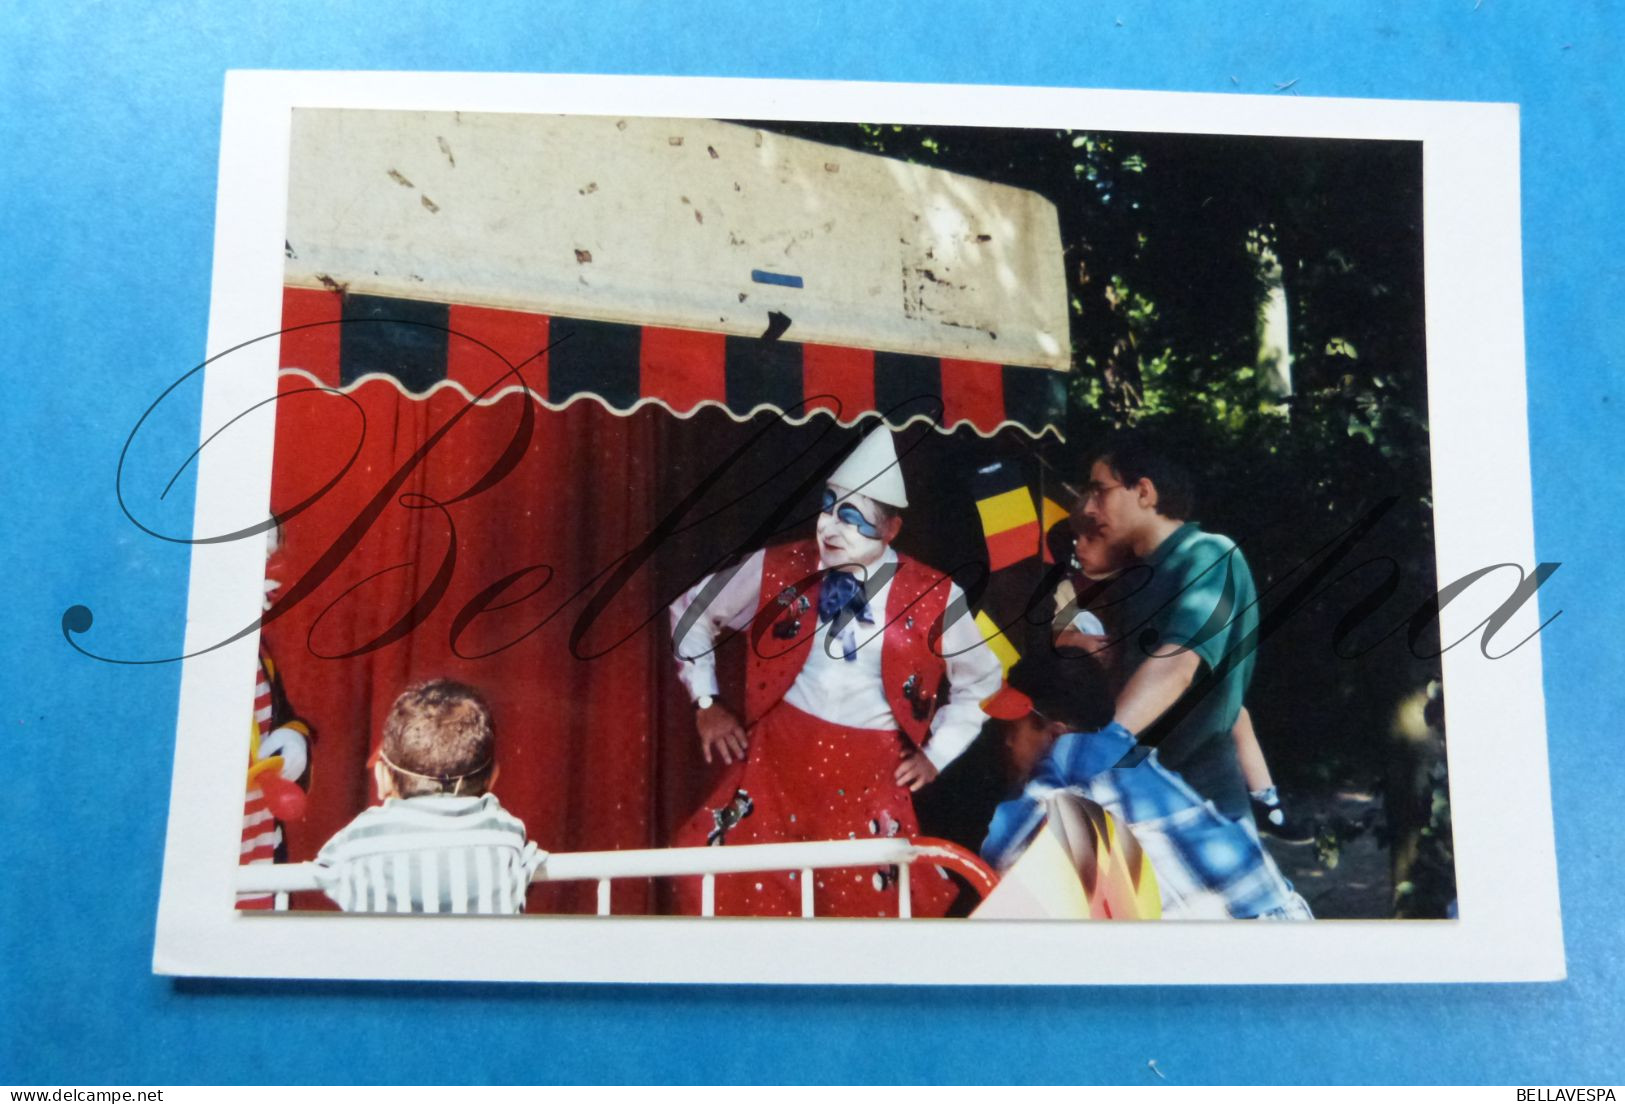 Circus Pauwels 4 x foto  voorstelling DAVID CHIPPERFIELD 1997